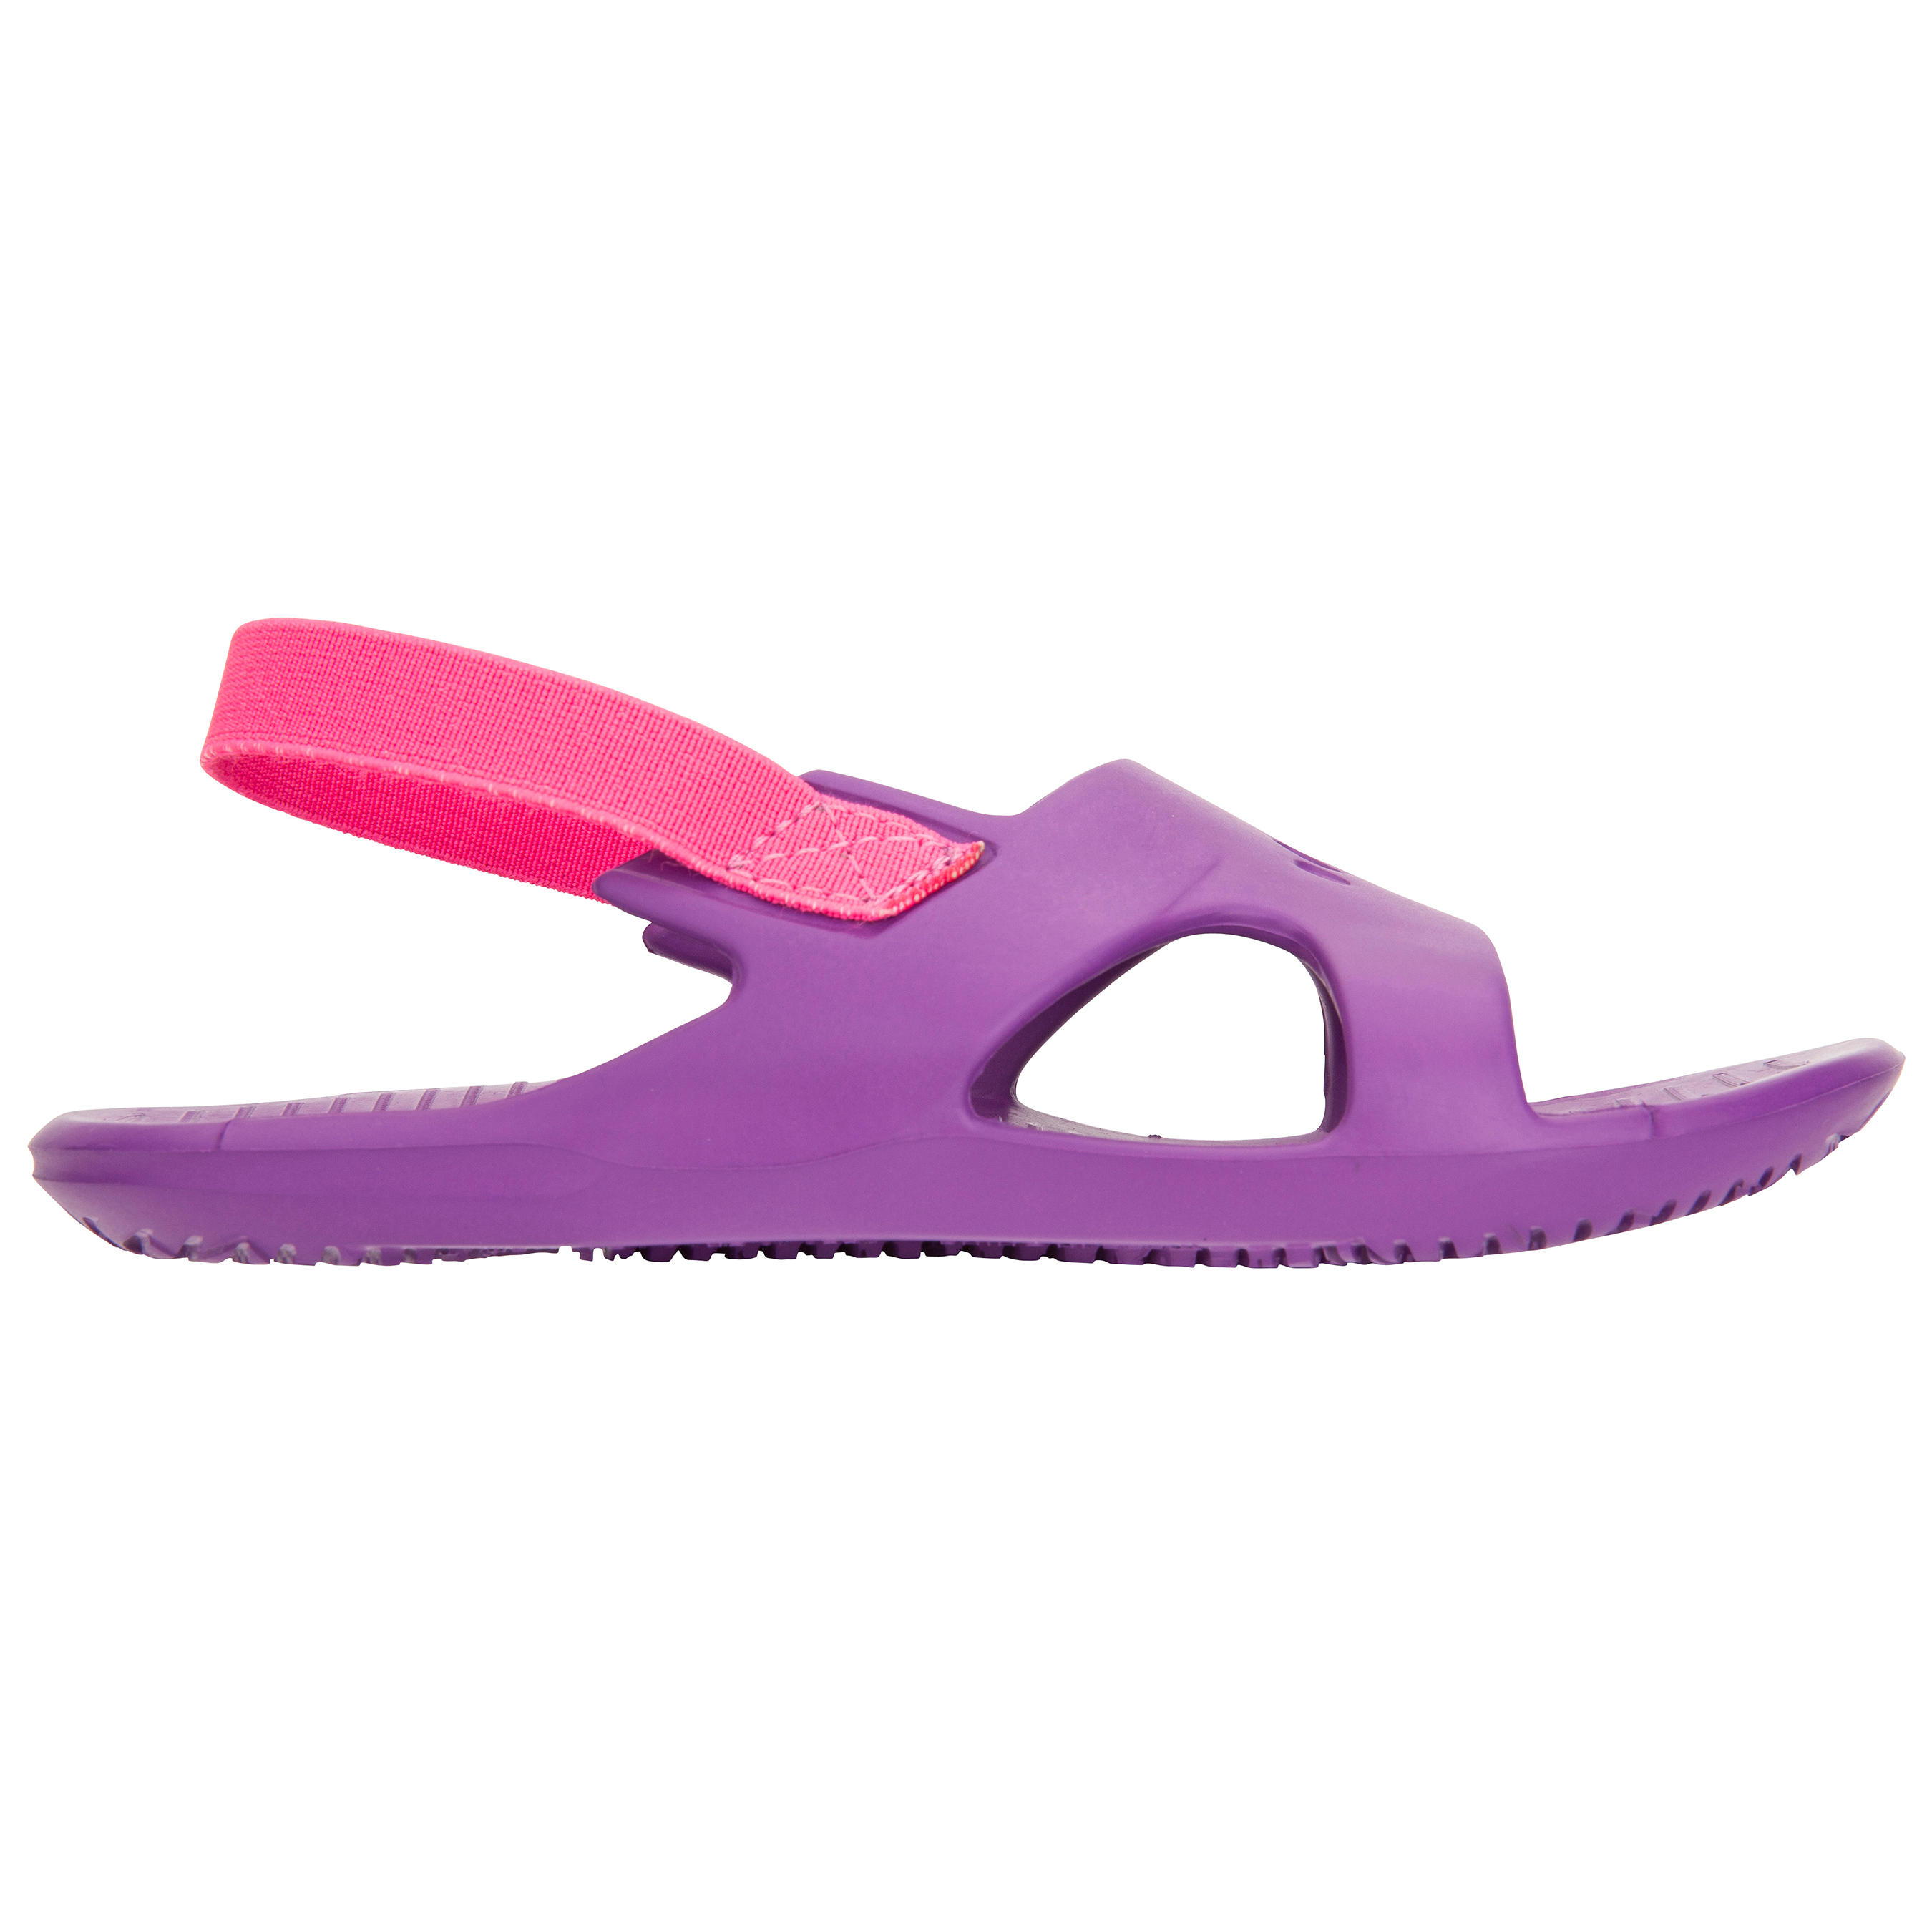 Kids' Pool Sandal SLAP 100 BASIC - Purple Pink 10/10